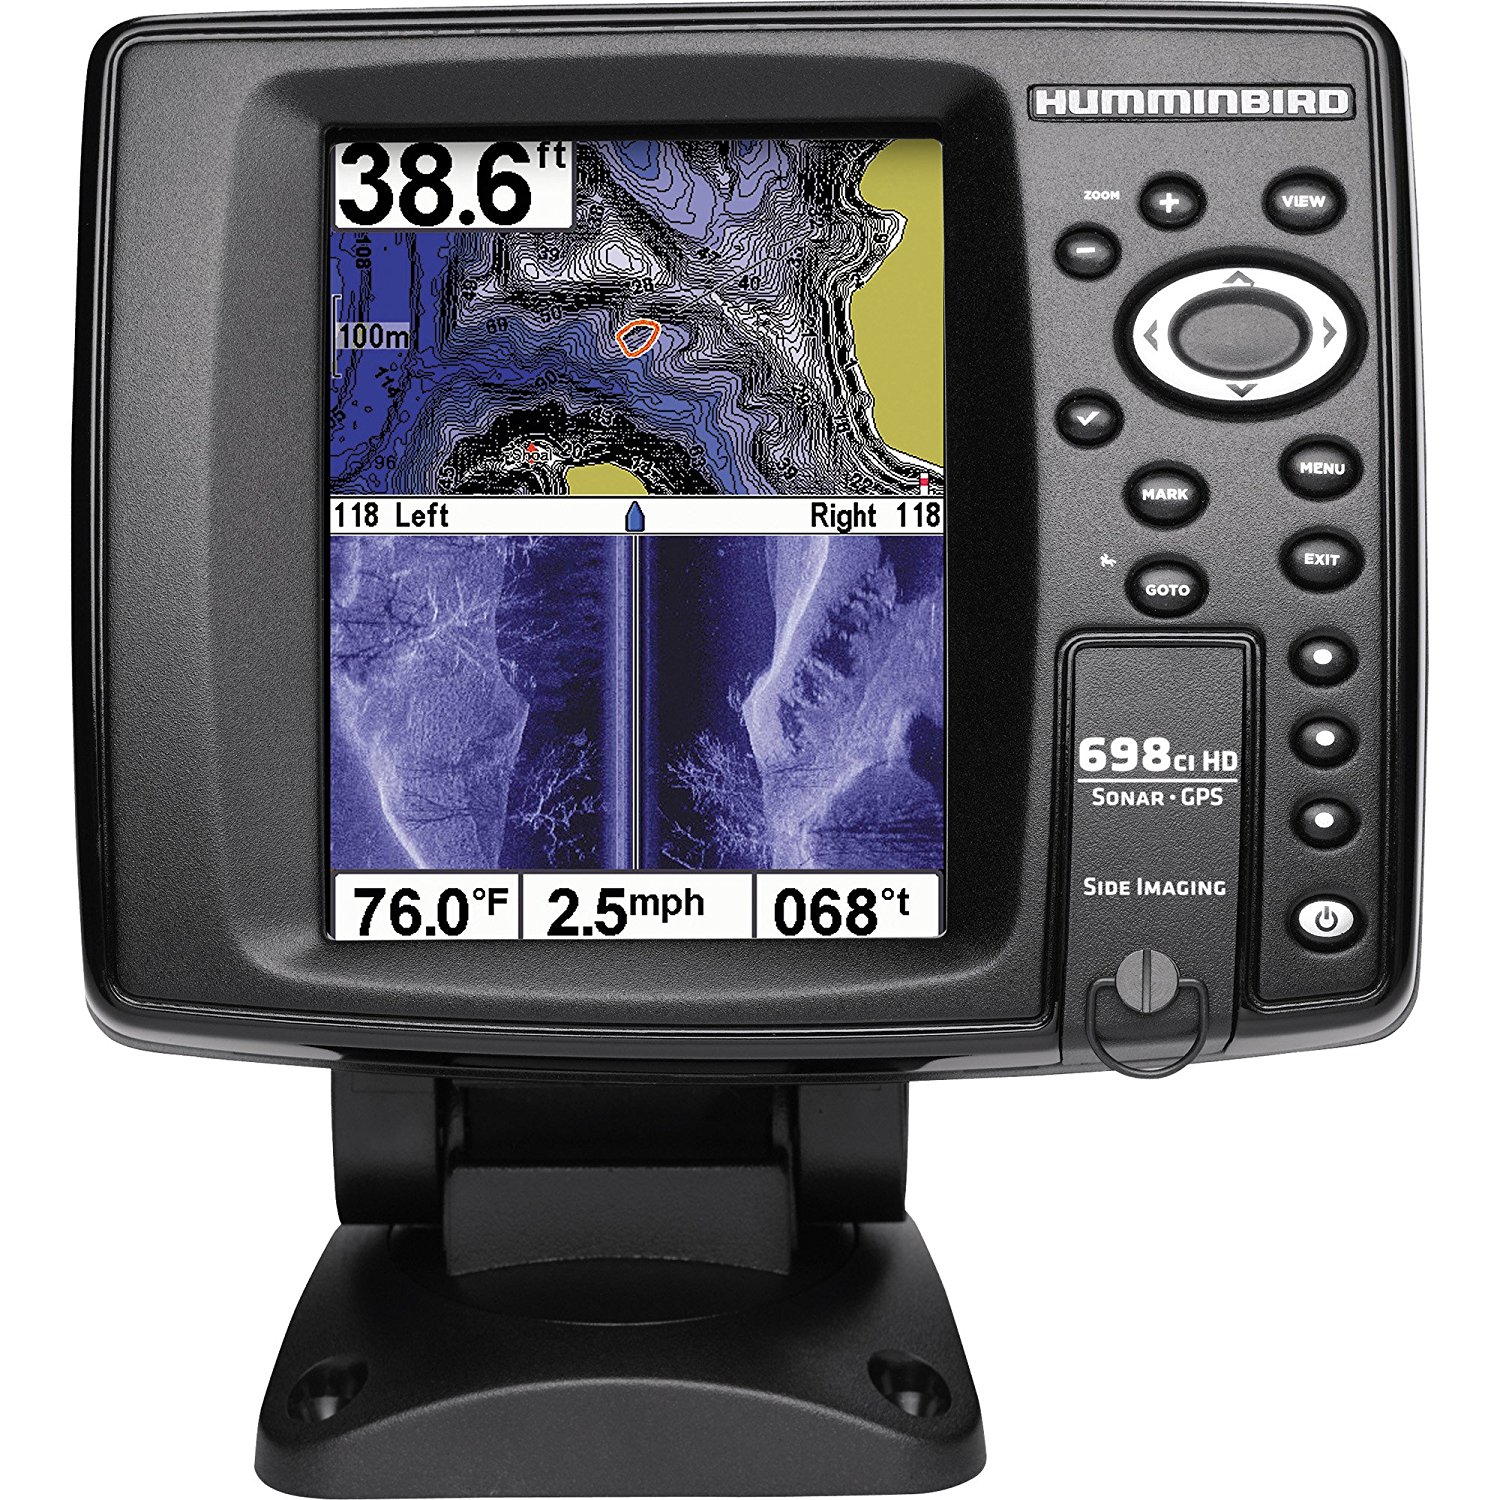 Humminbird 409470-1 600 698ci HD SI Internal GPS Sonar Combo Fishfinder with Side Imaging (Black)